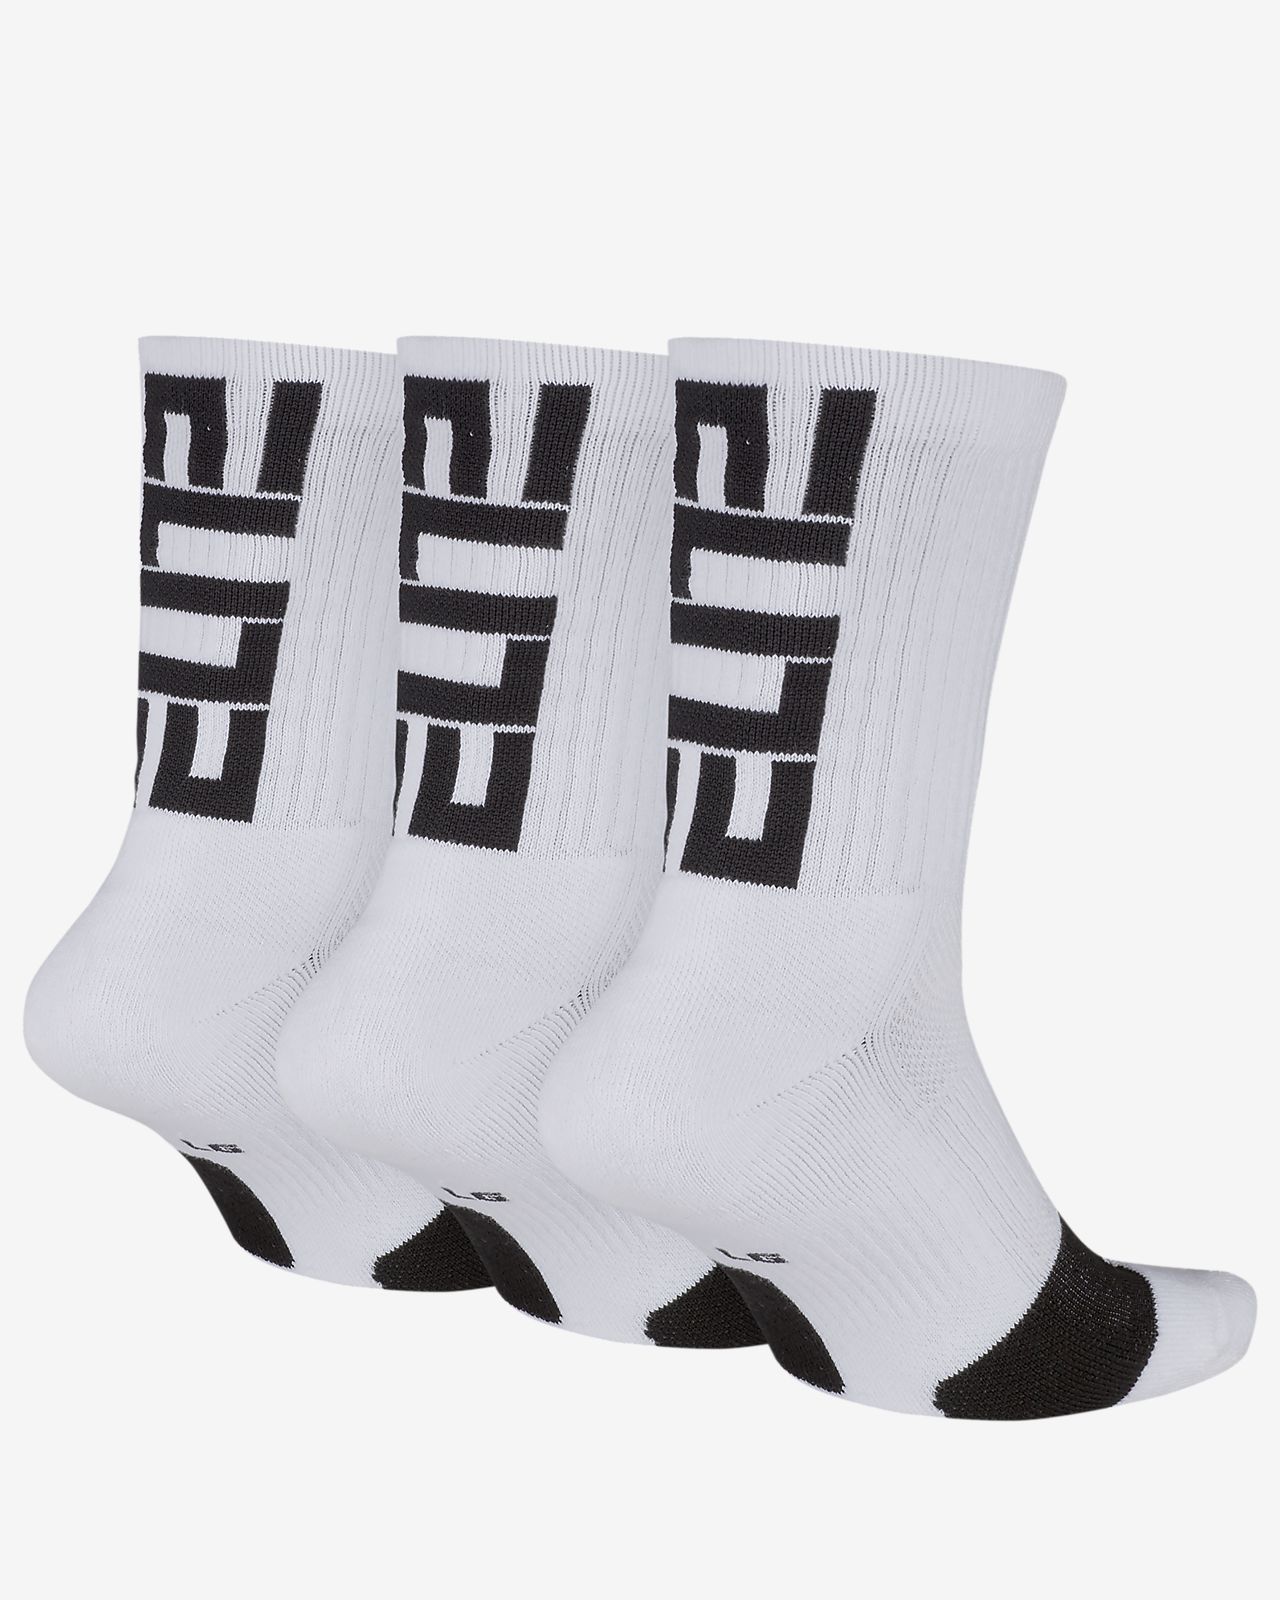 nike elite socks nike store